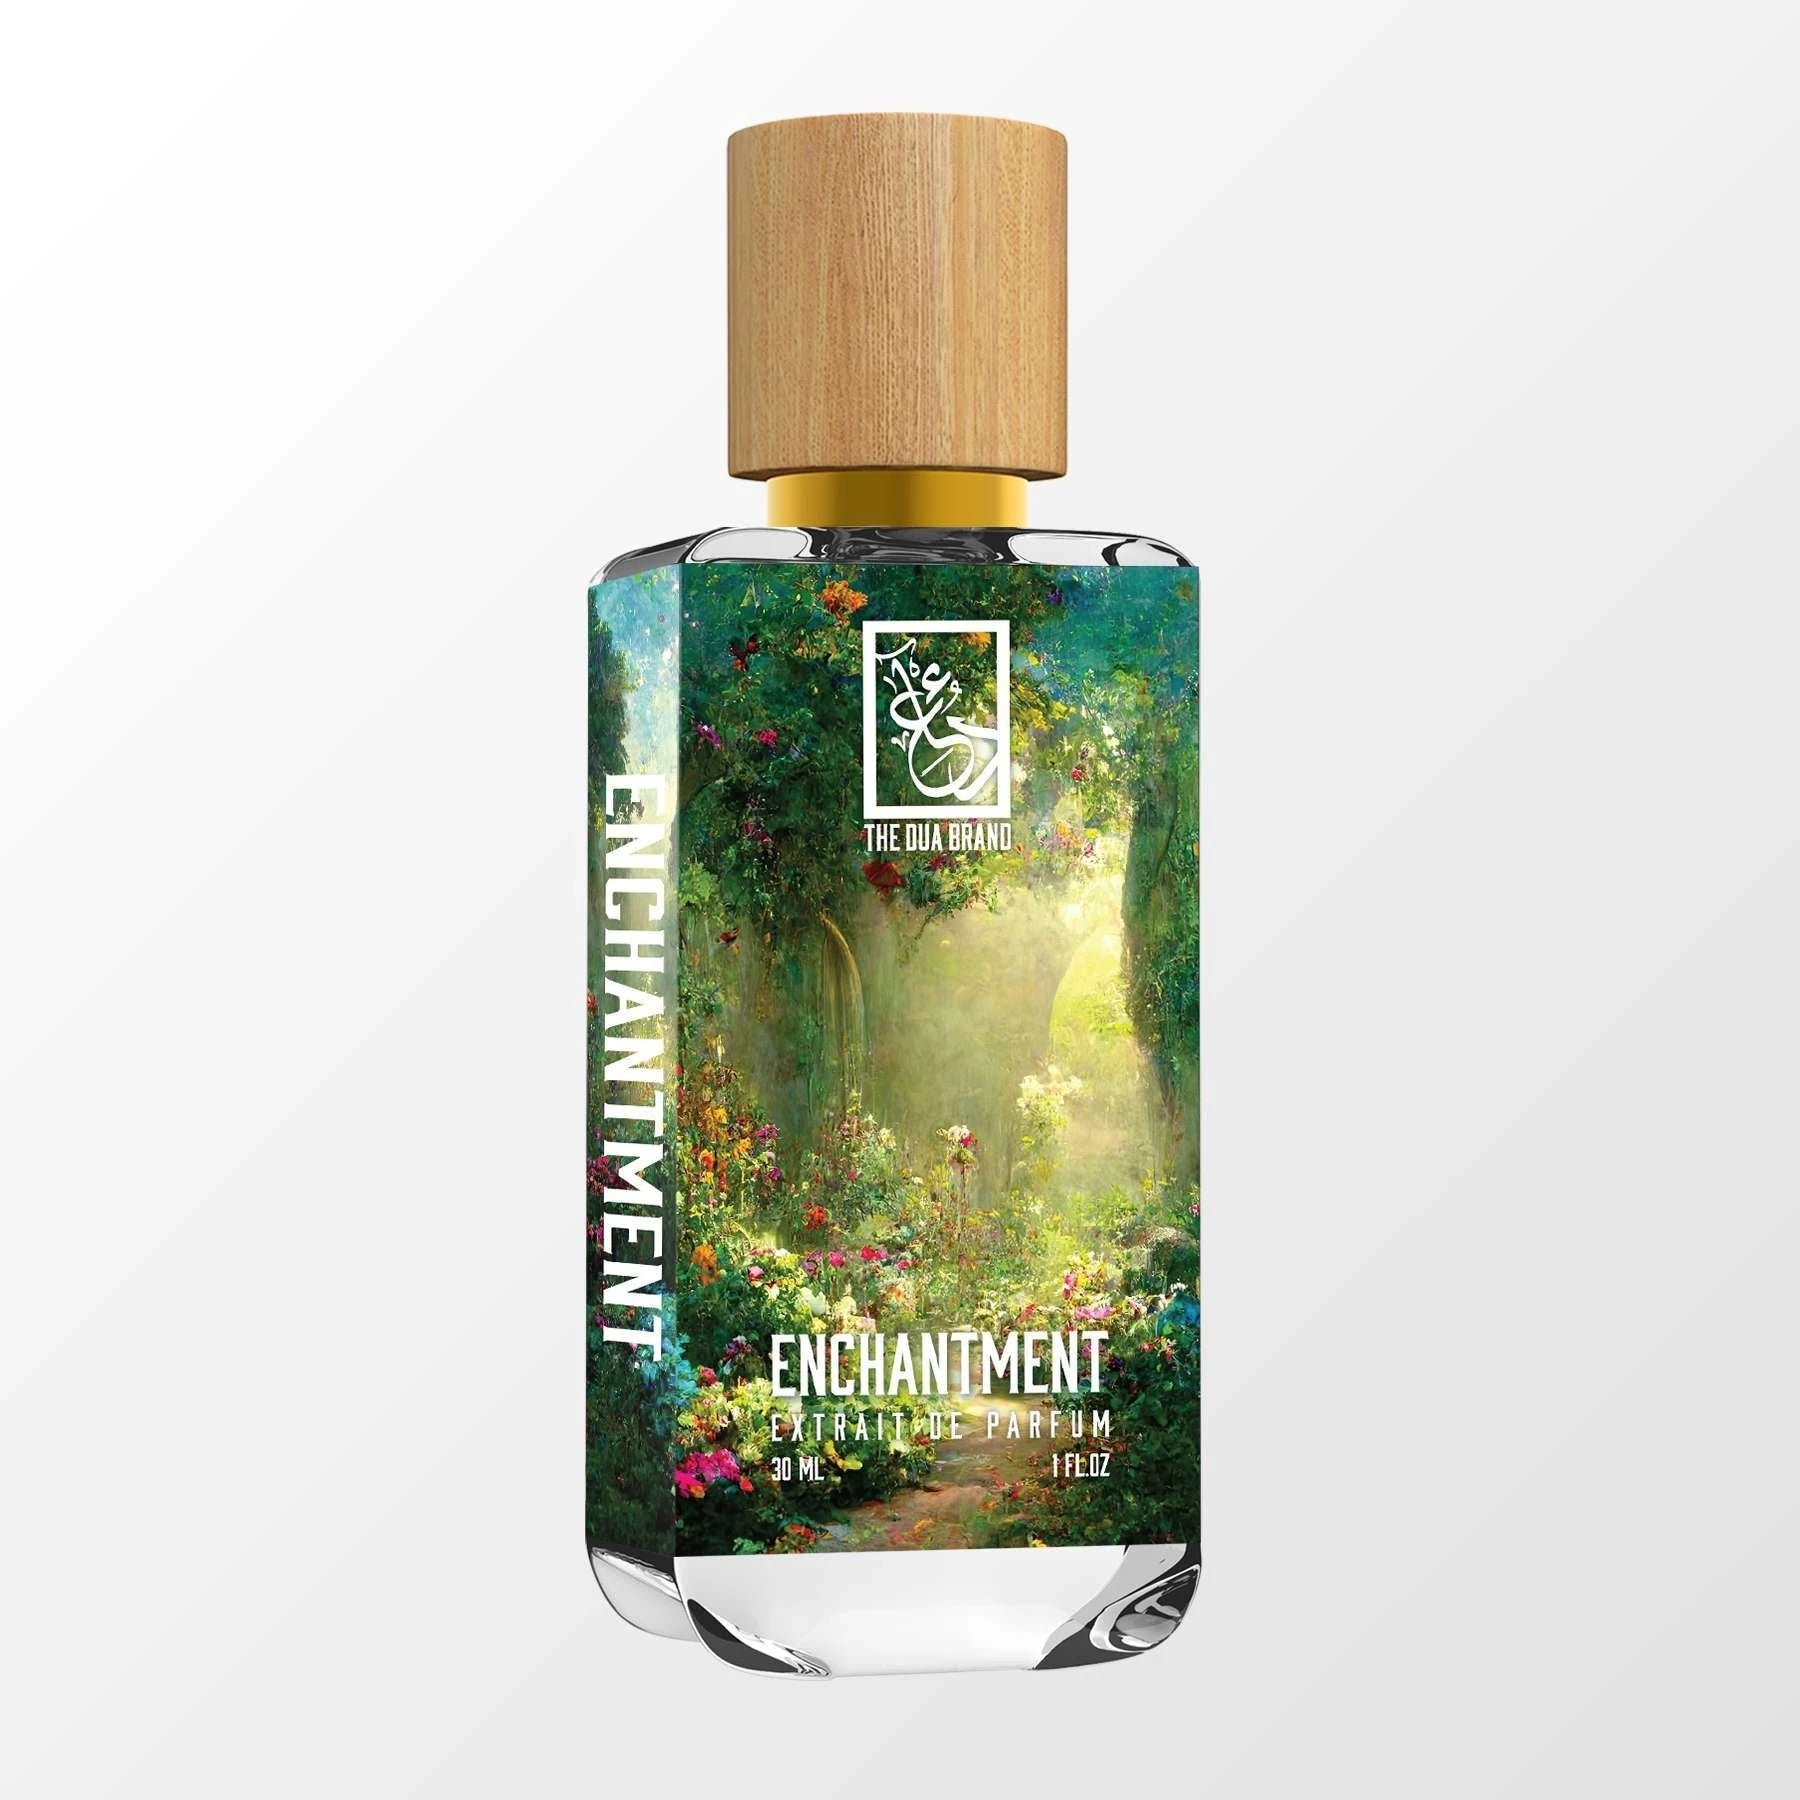 Kola Tabac - DUA FRAGRANCES - Amber Spicy - Unisex Perfume - 34ml/1.1 FL OZ  - Extrait De Parfum